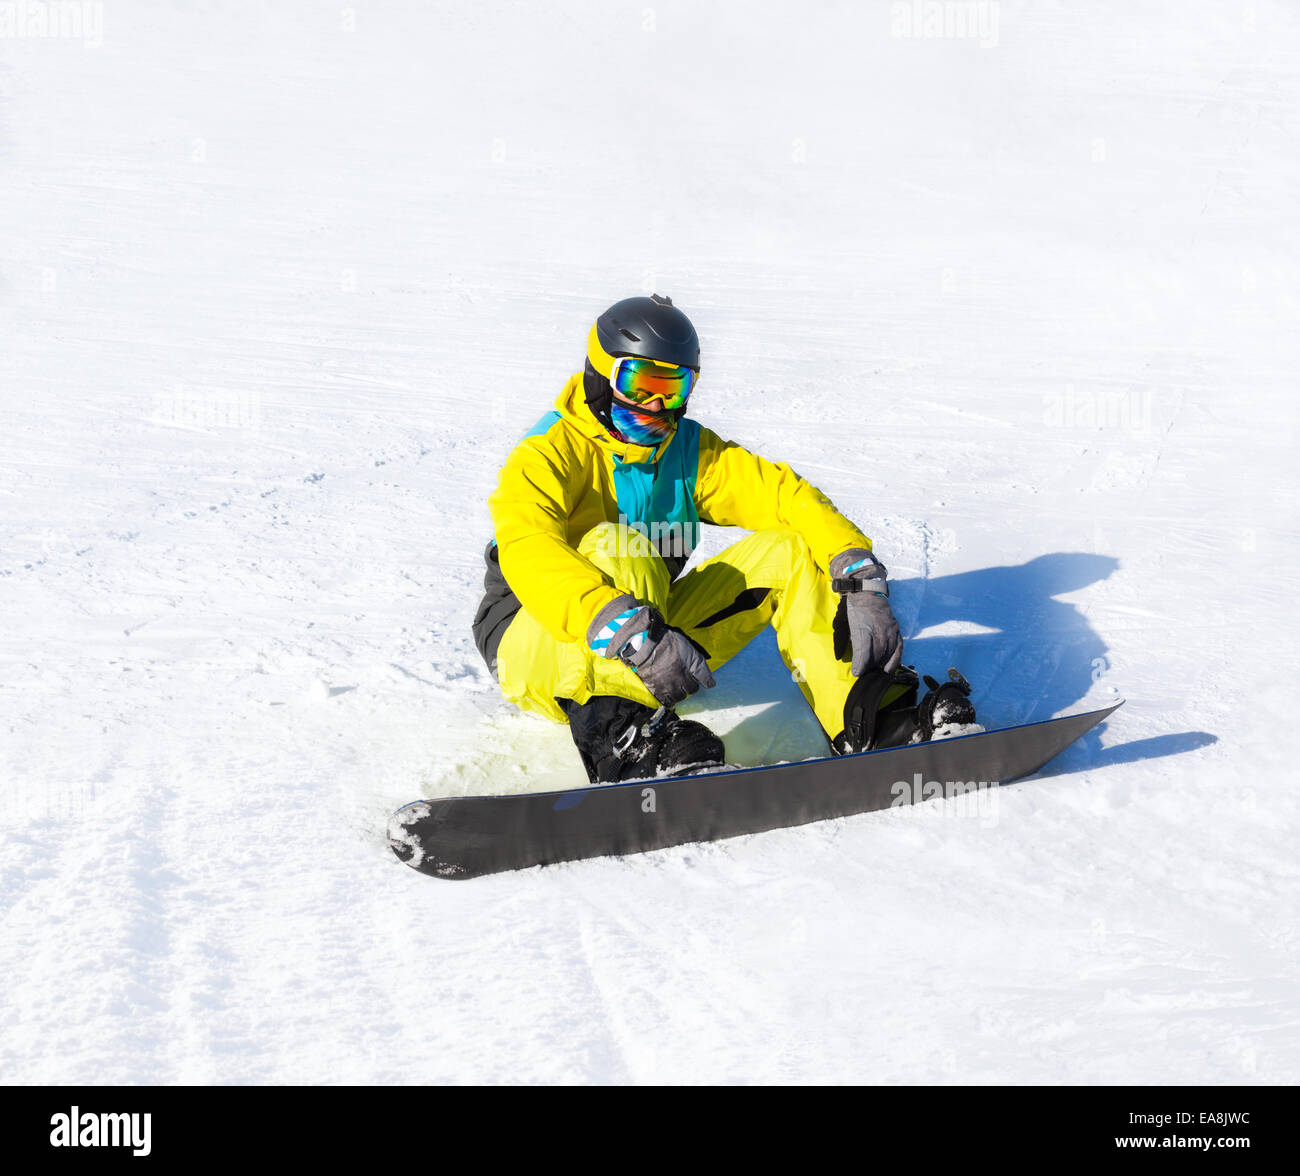 Snowboarder sitting on snow mountains Stock Photo